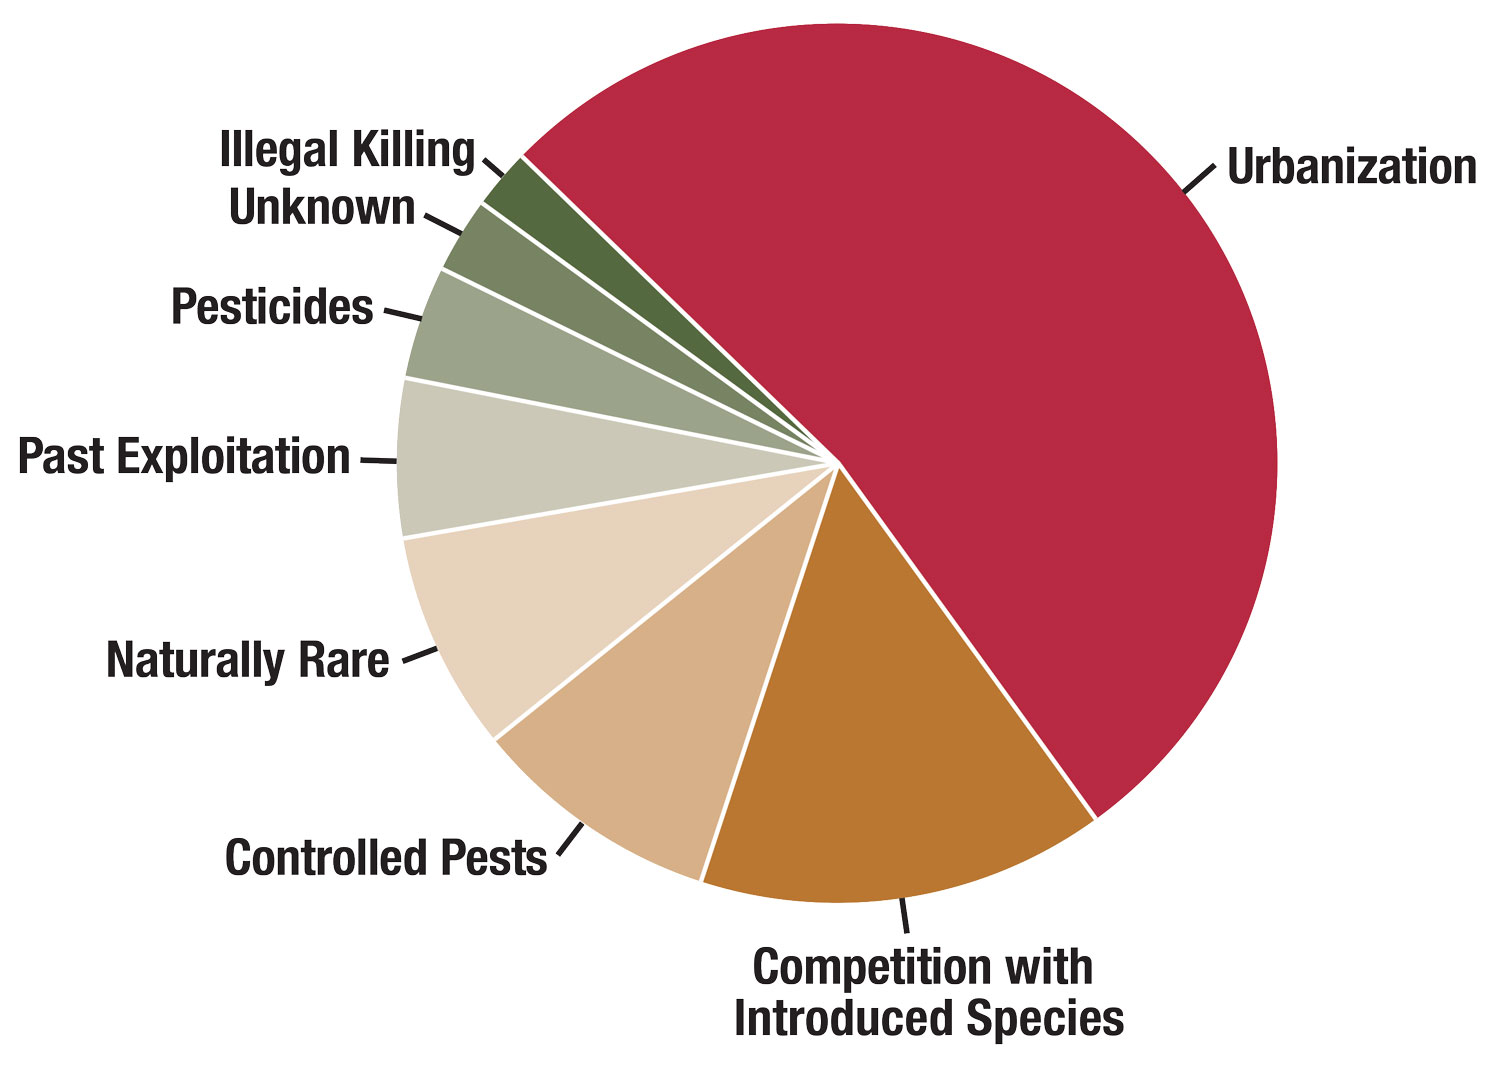 Endangered Species Pie Chart